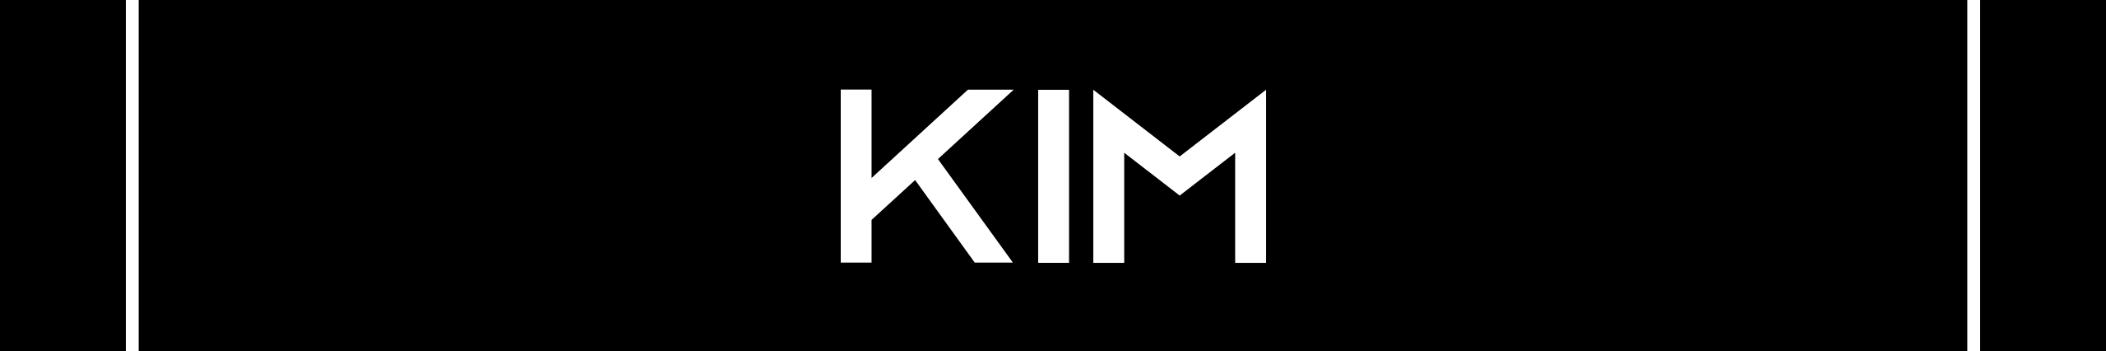 THE KIM